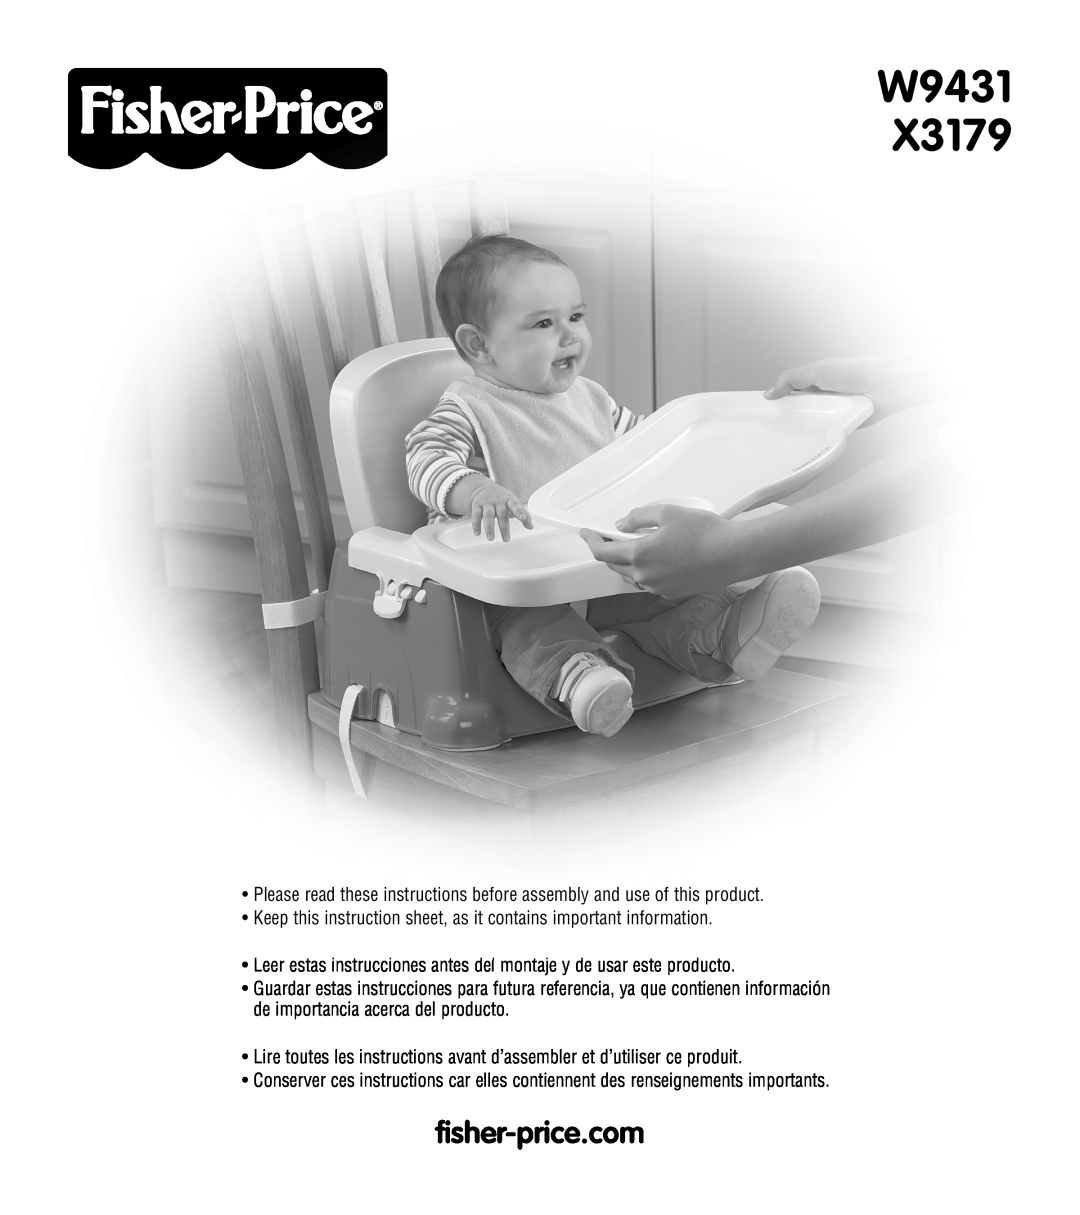 Fisher-Price instruction sheet W9431 X3179, ﬁsher-price.com 